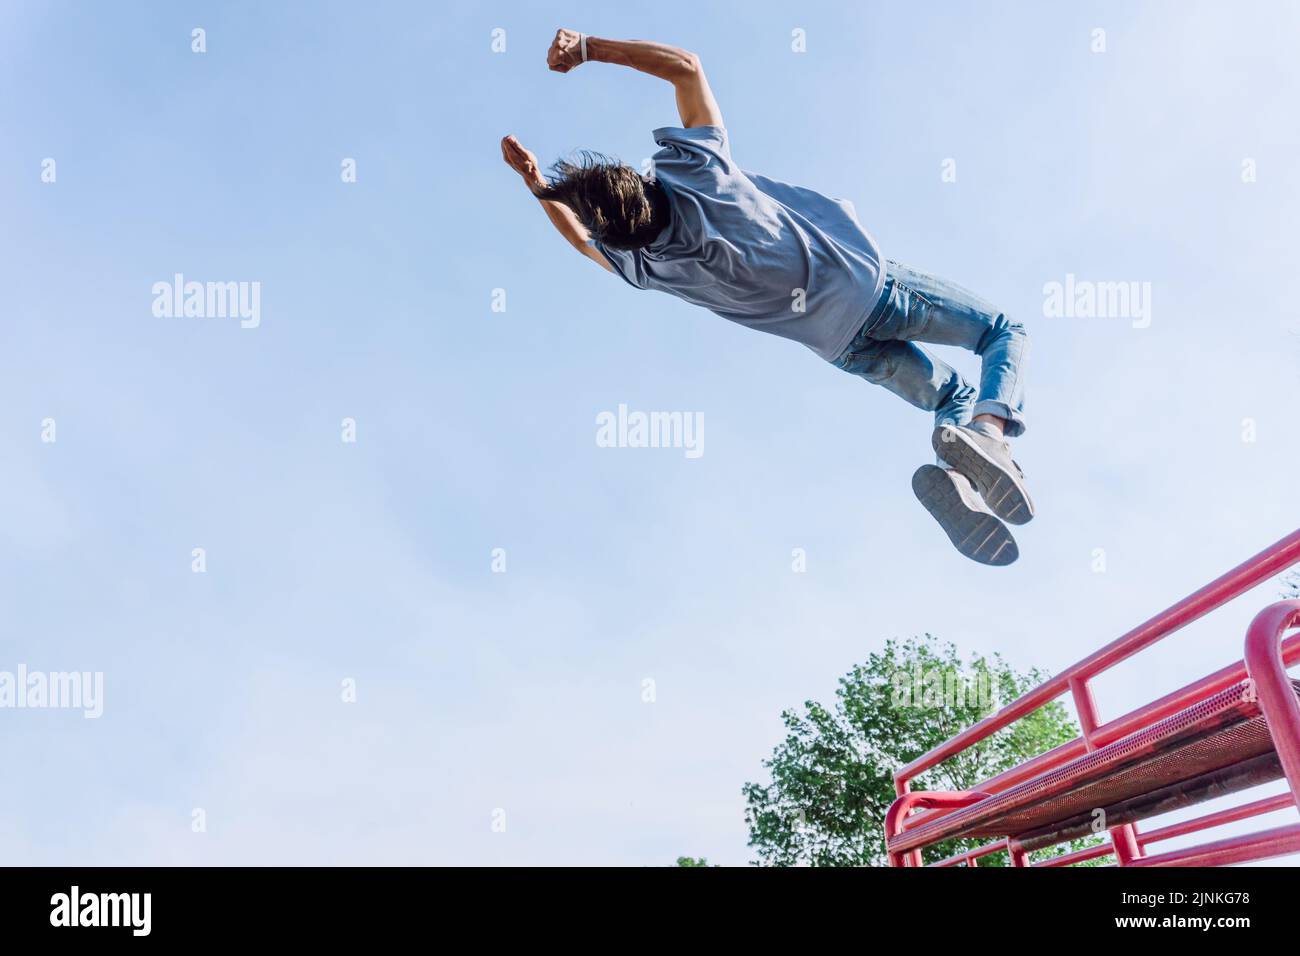 salto, parkour, acrobatico, freerun, jumper, jumping, salti, parkours, acrobazie, performance Foto Stock